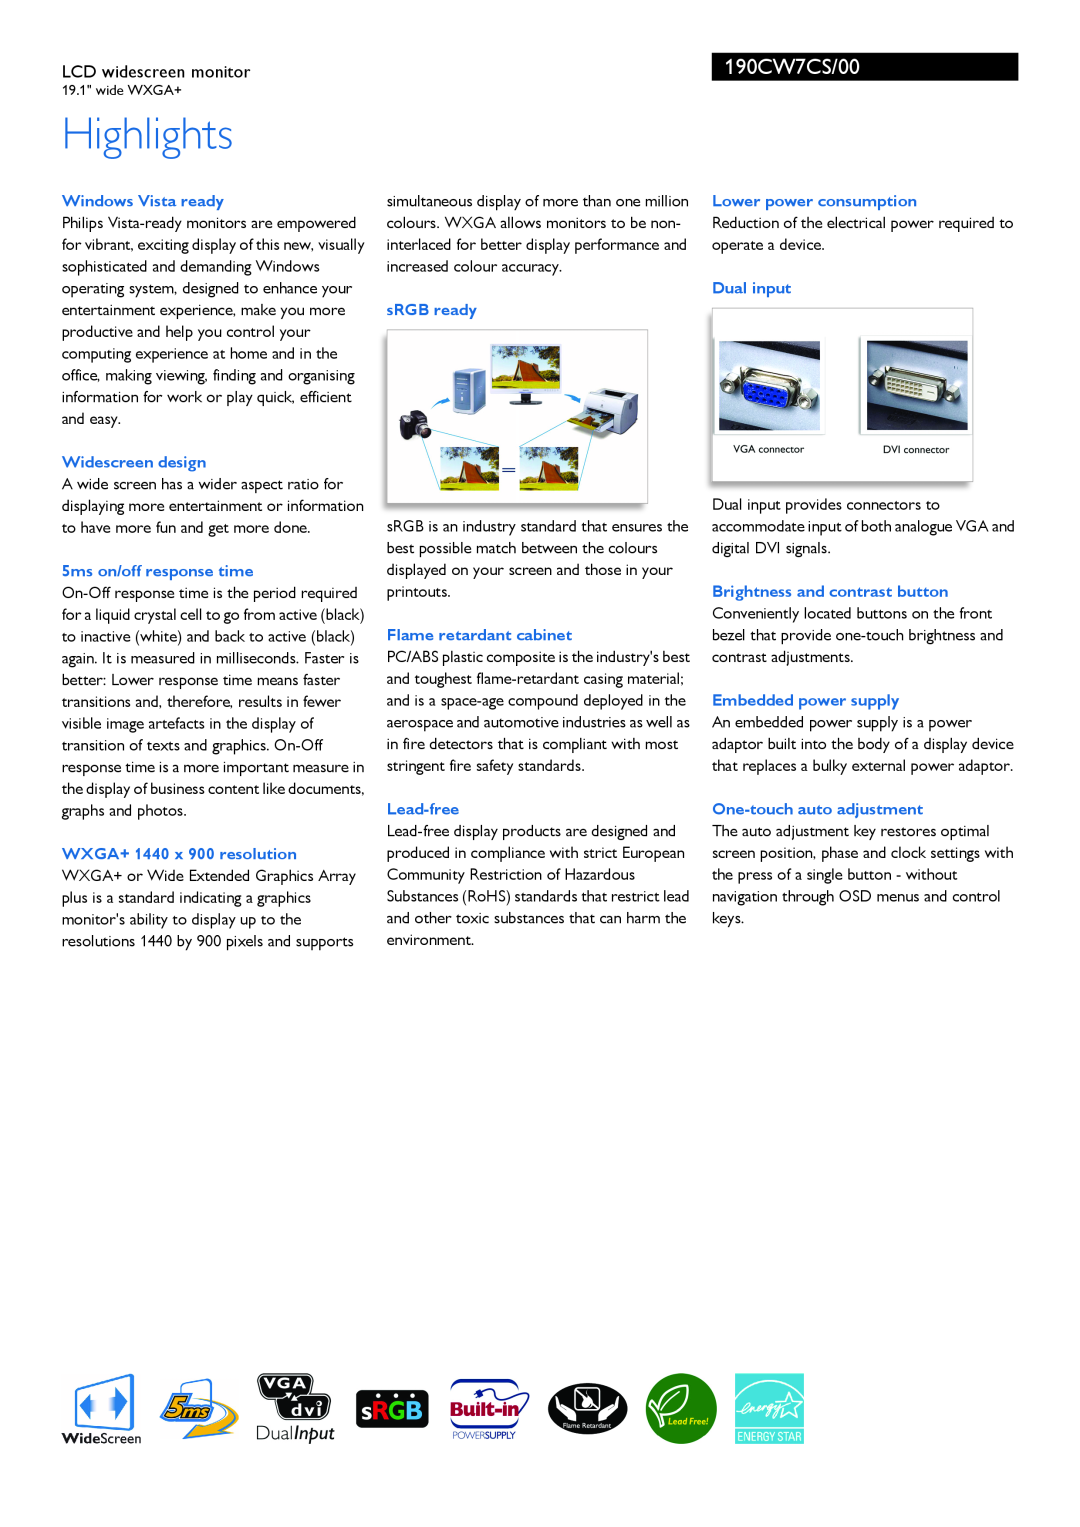 Philips manual Highlights, 190CW7CS/00, LCD widescreen monitor 